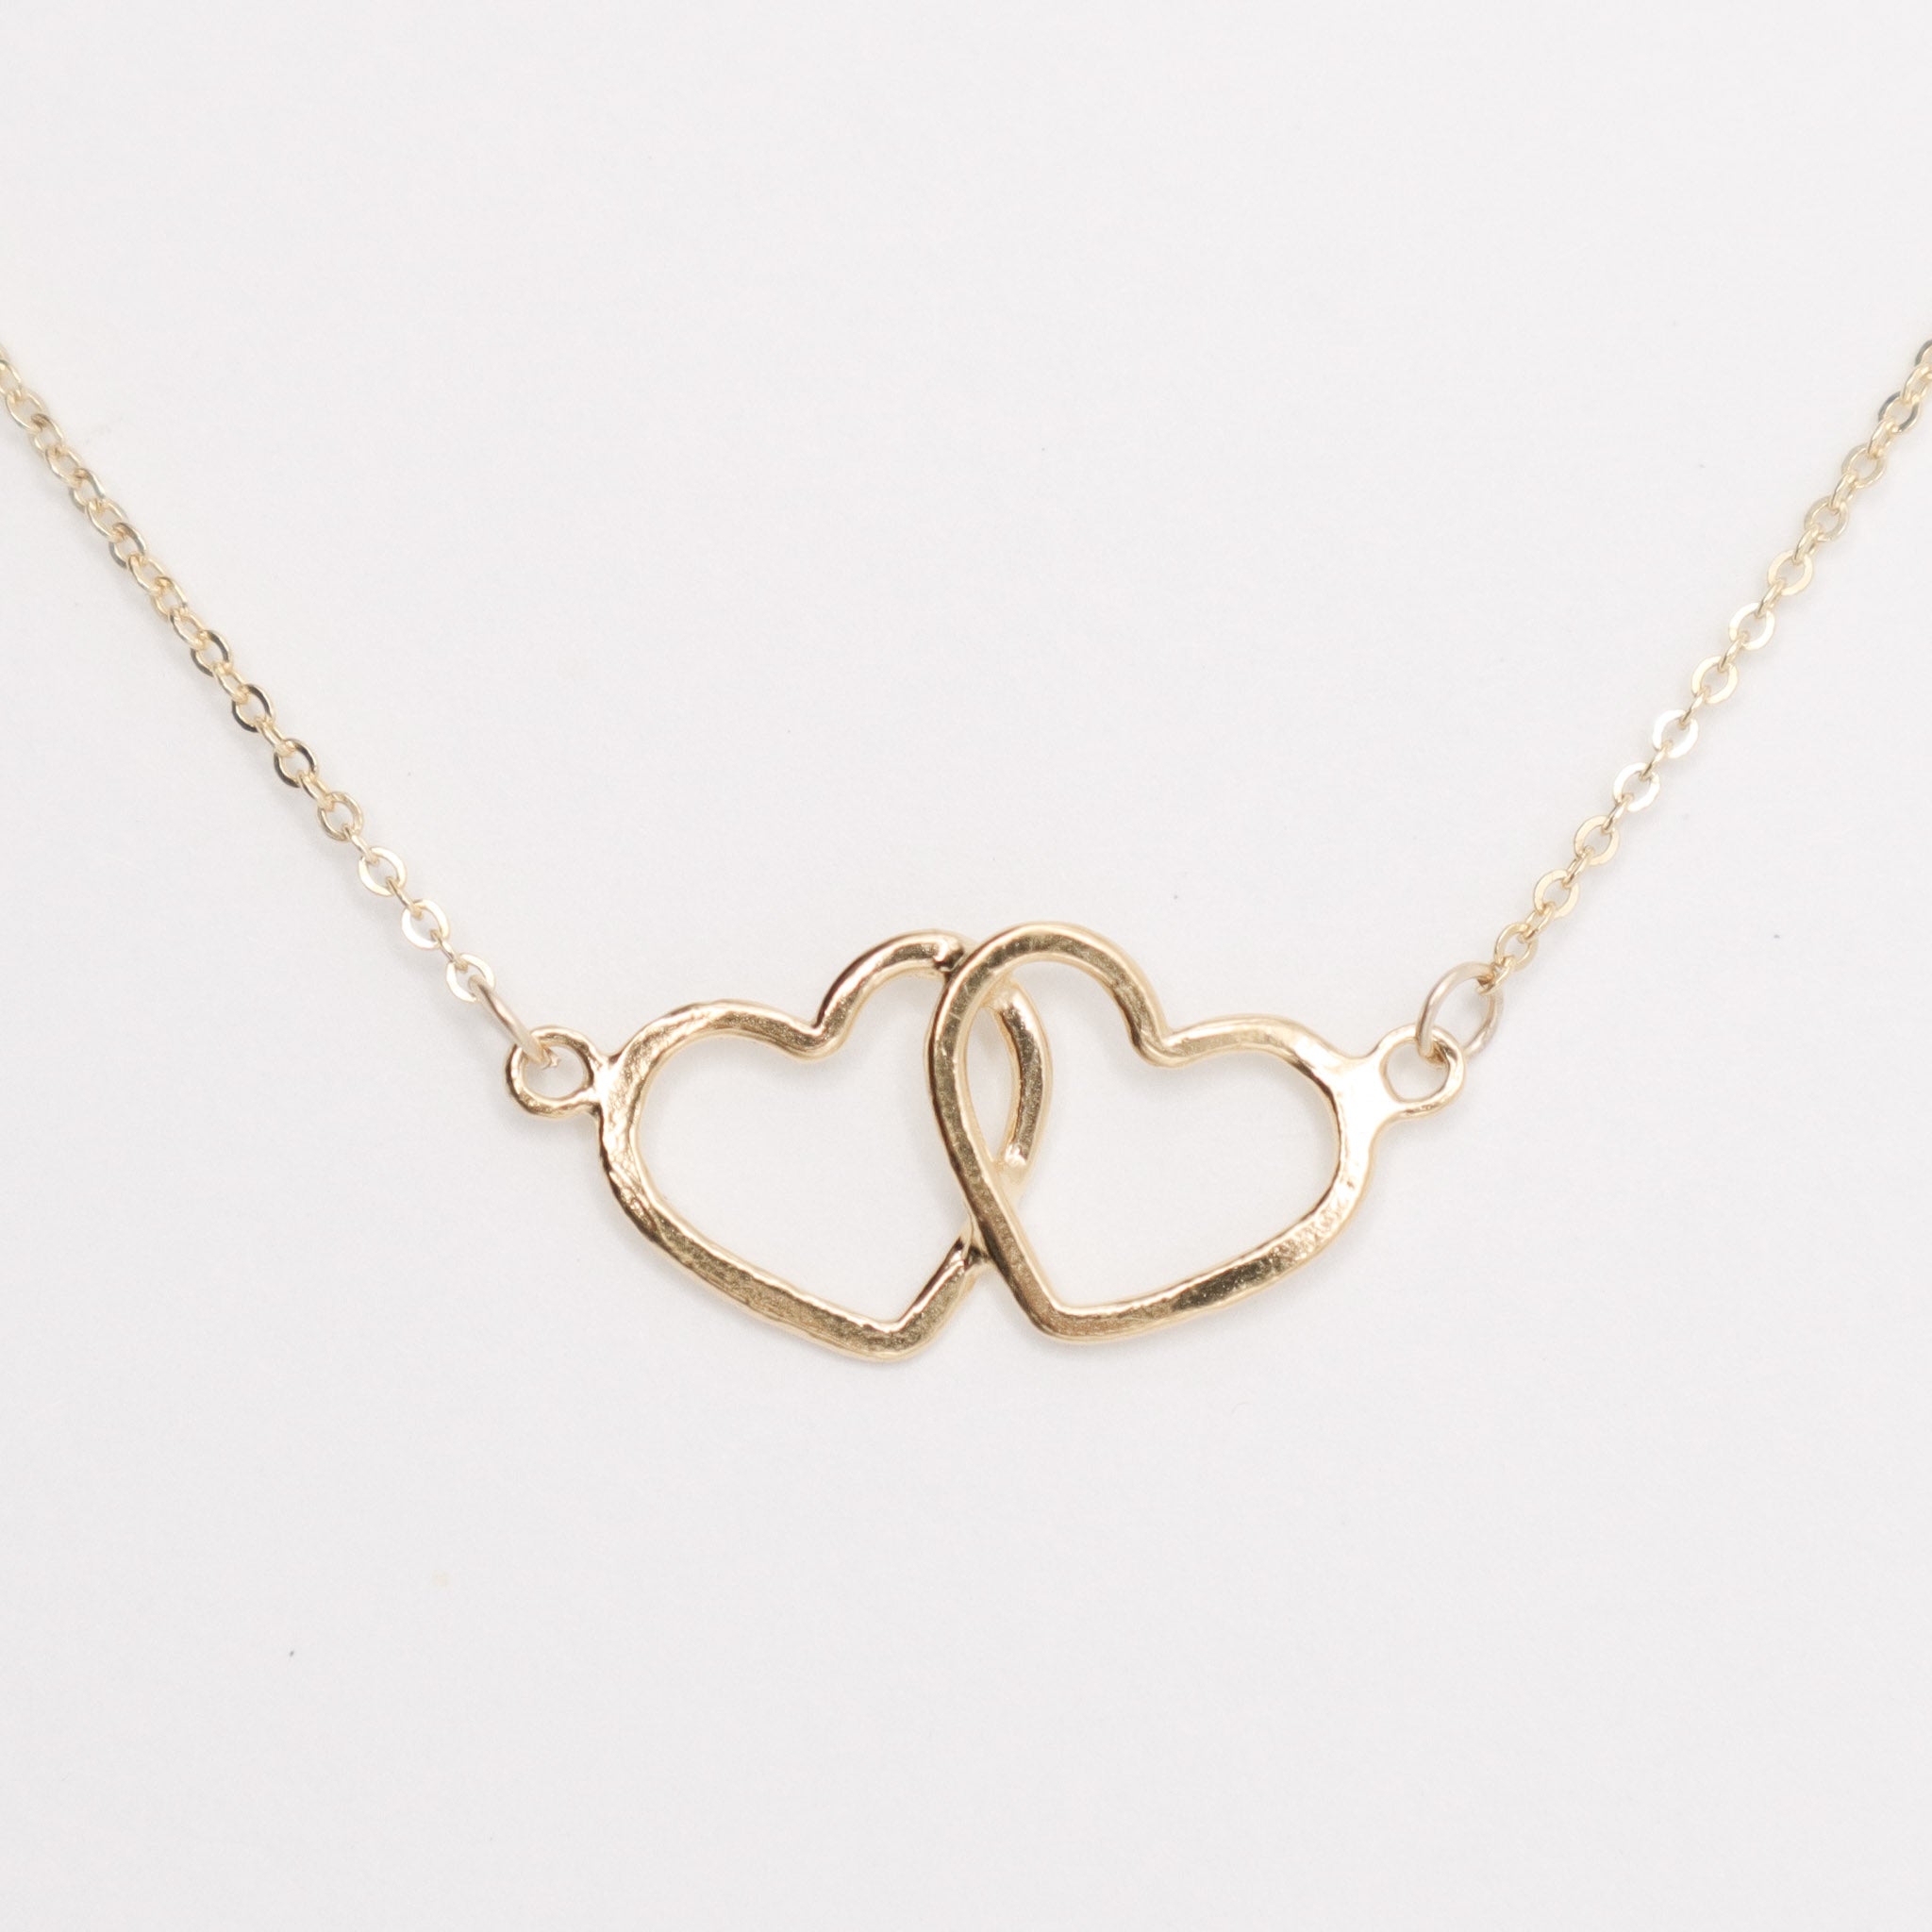 Gold Friendship Necklace, closeup image